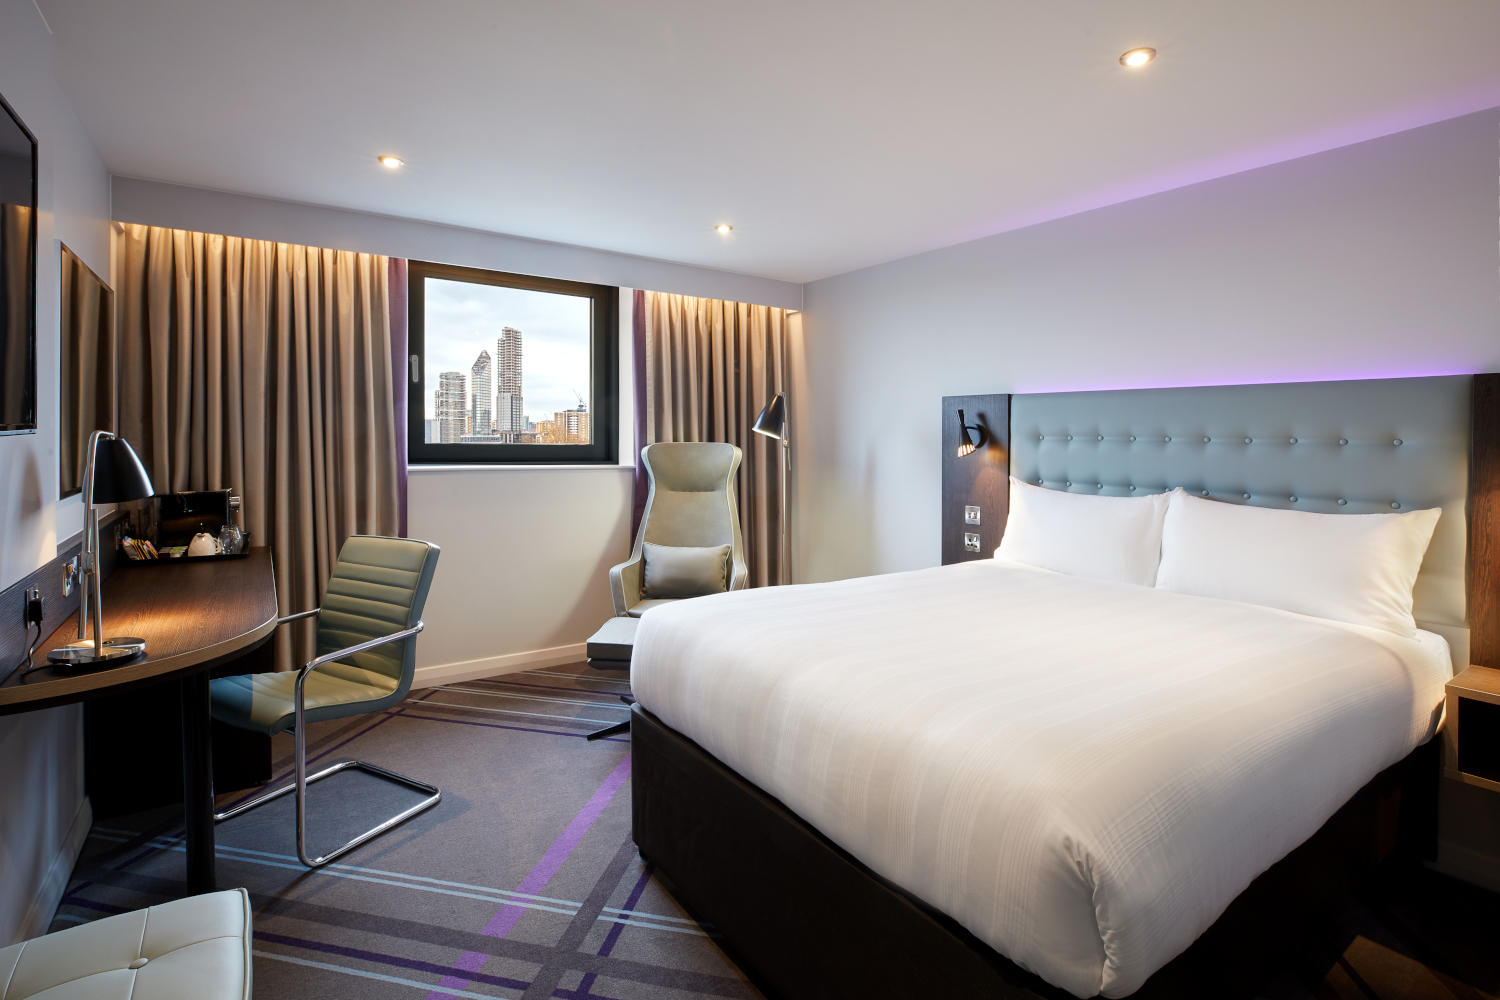 Premier Inn plus bedroom Premier Inn London Angel Islington hotel Islington 03330 031744